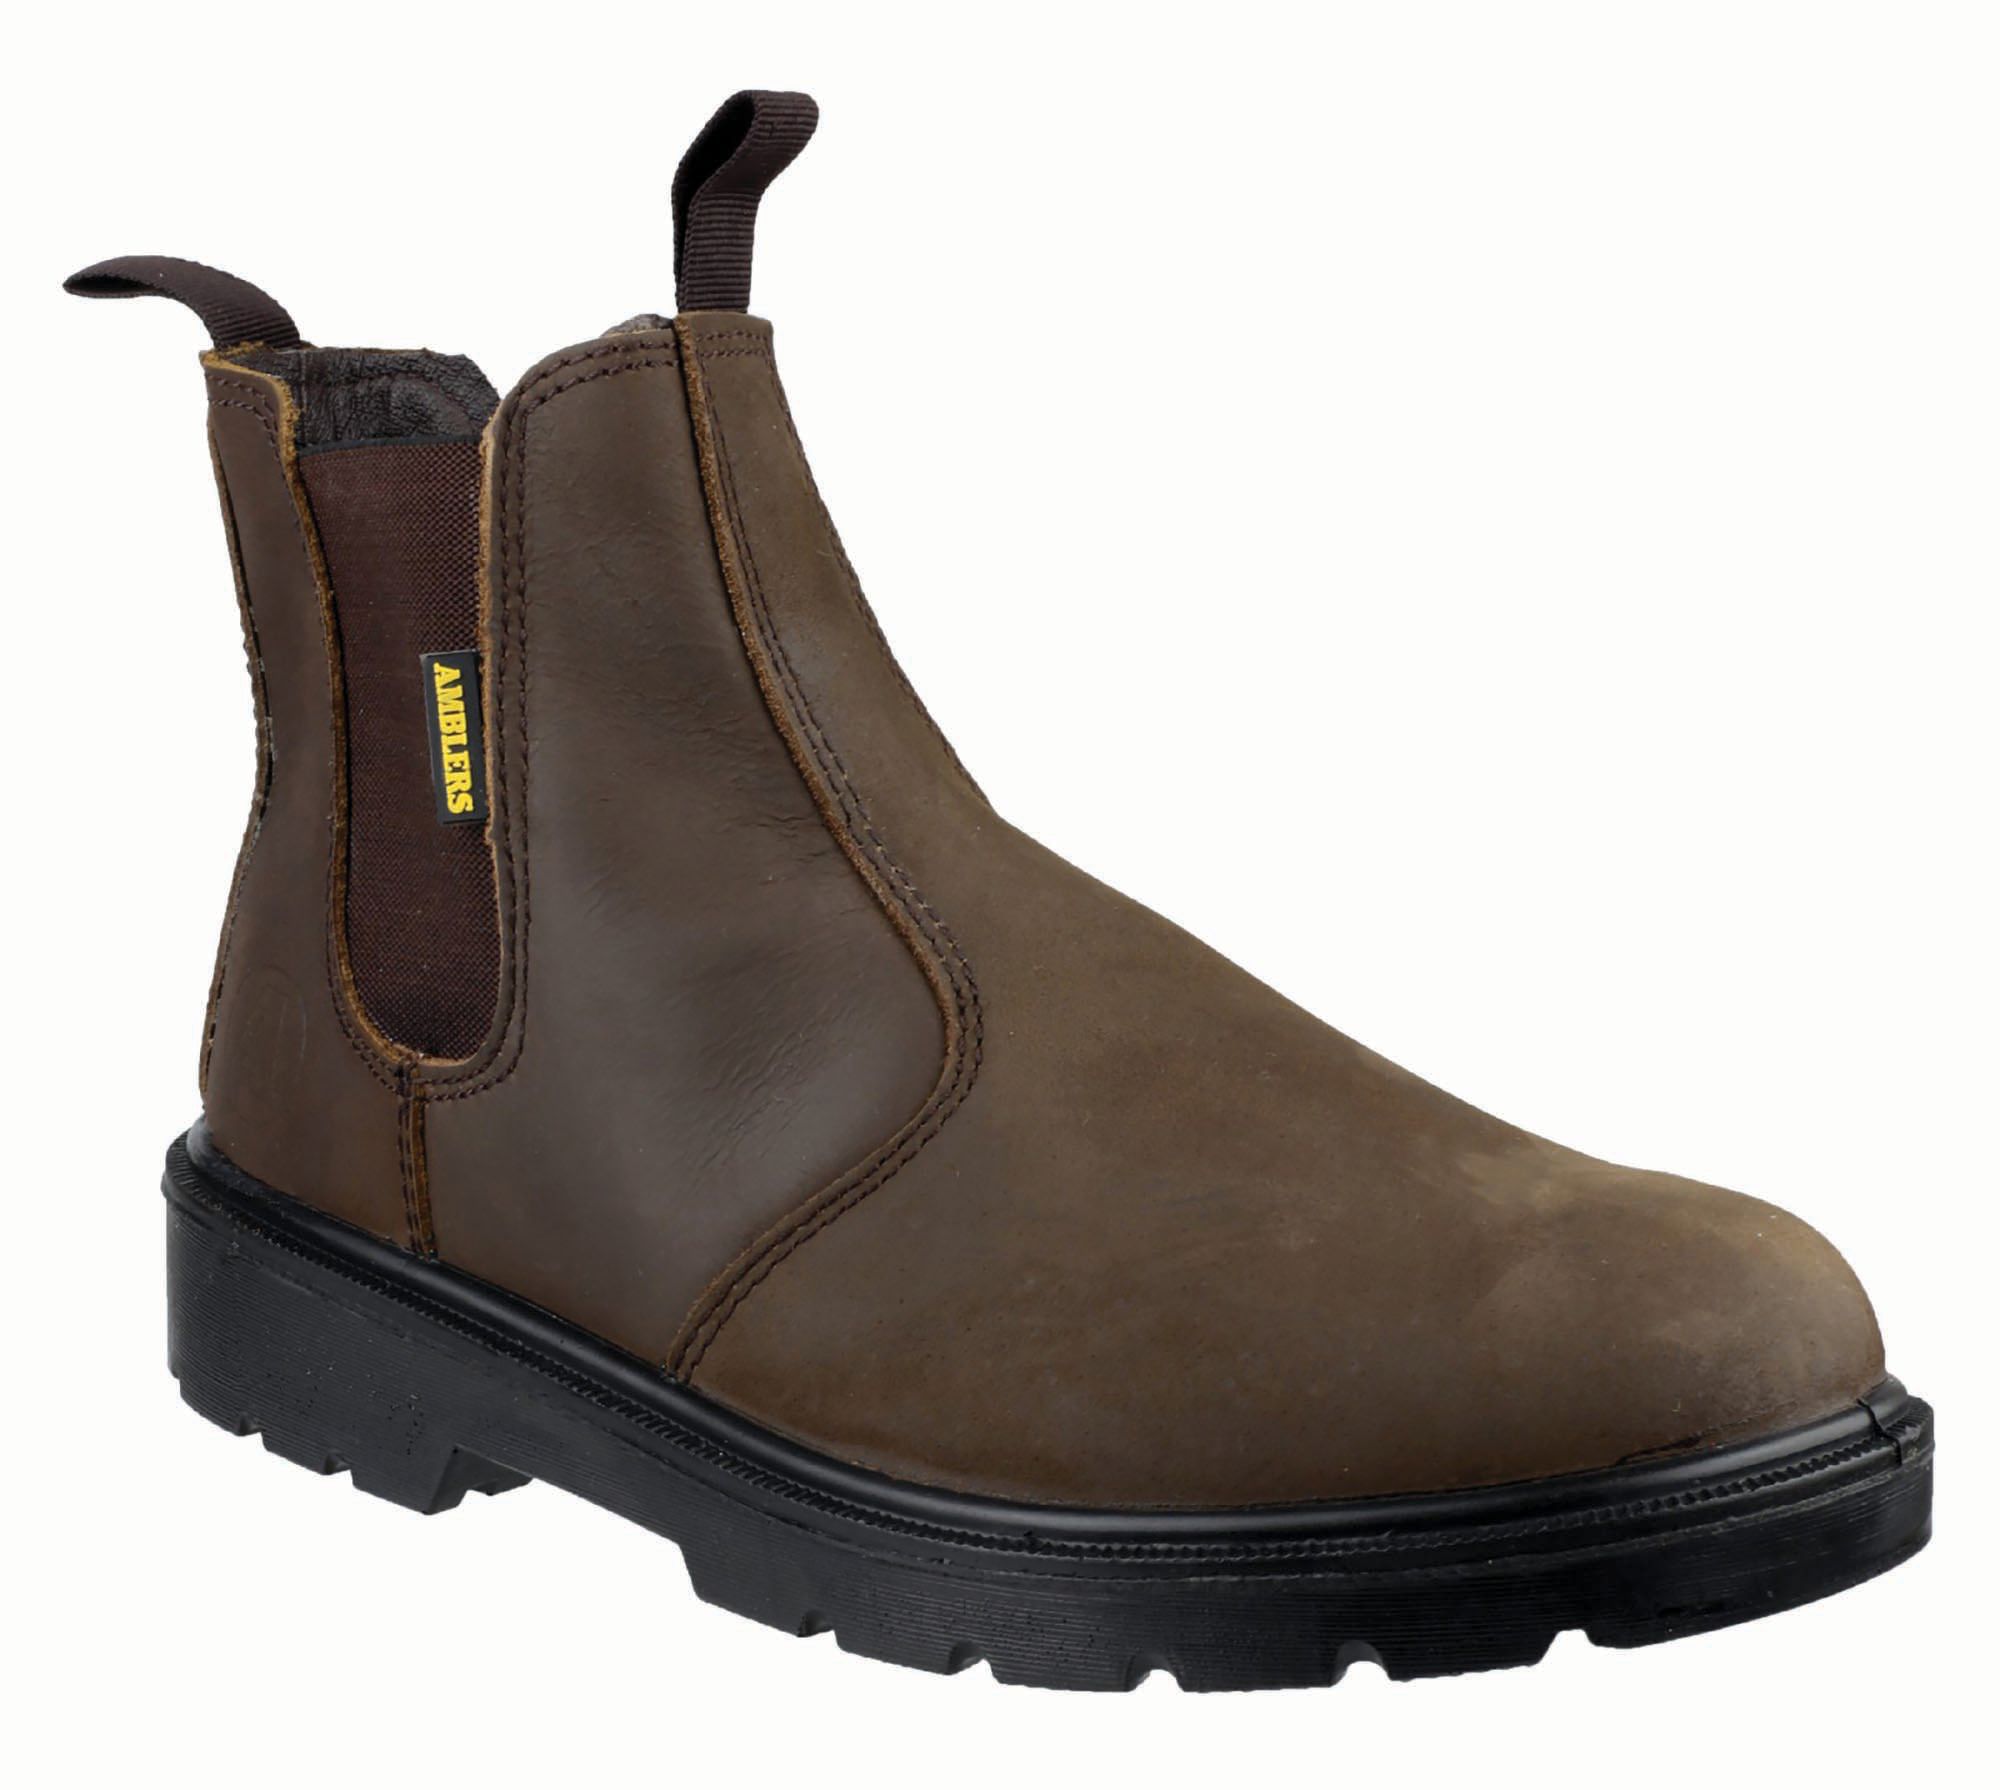 Image of Amblers Safety FS128 Dealer Safety Boot - Brown Size 12